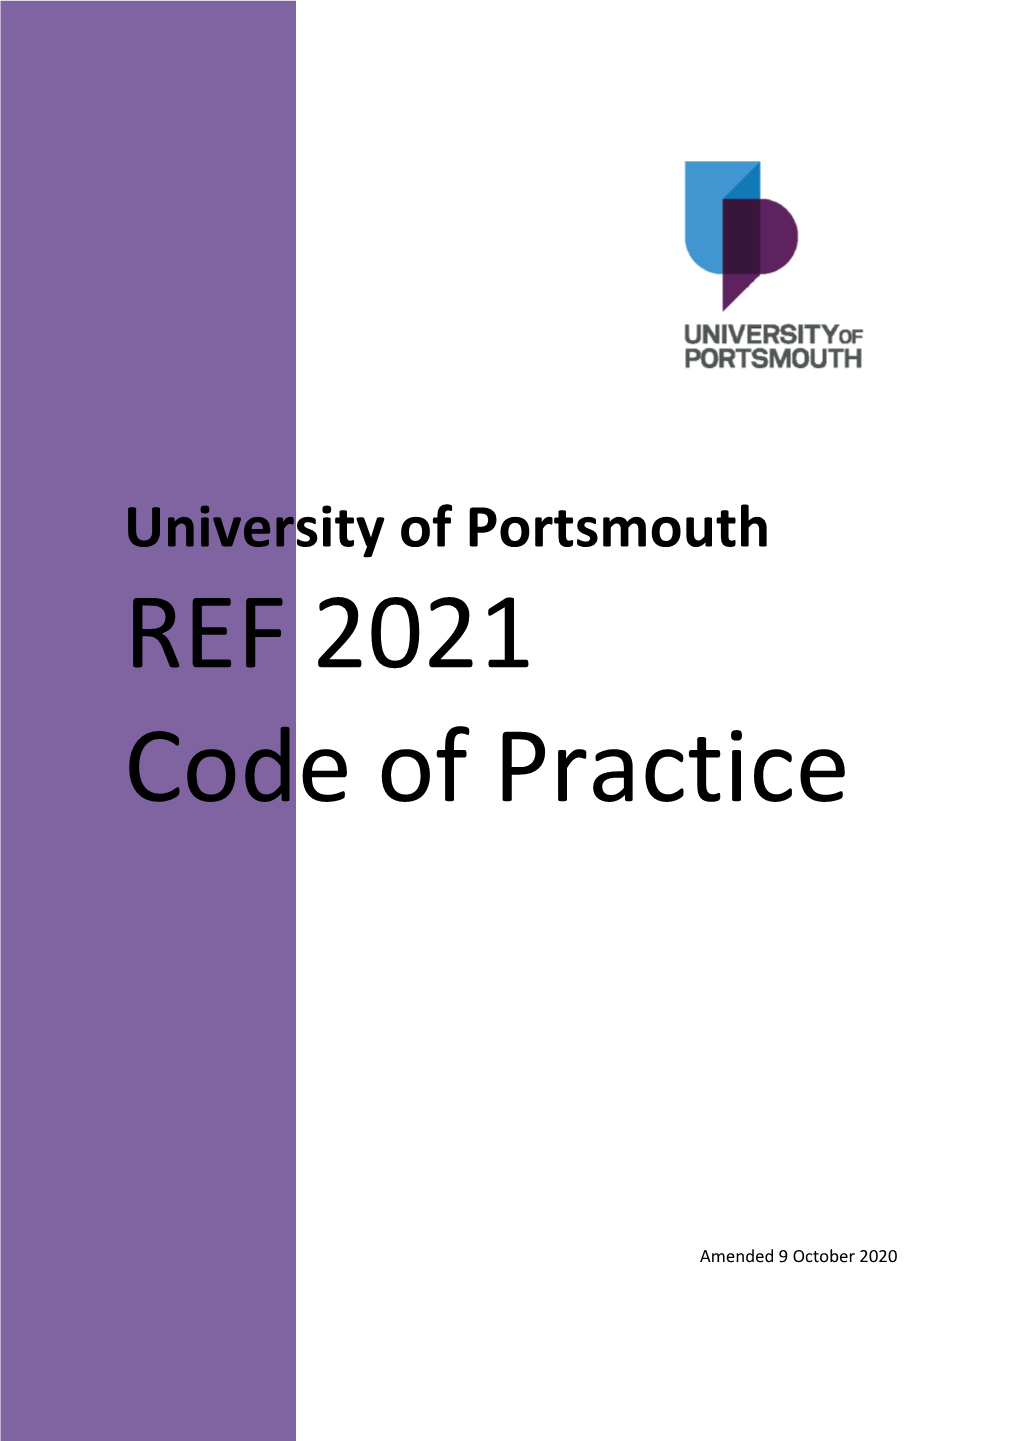 University of Portsmouth REF 2021 Code of Practice